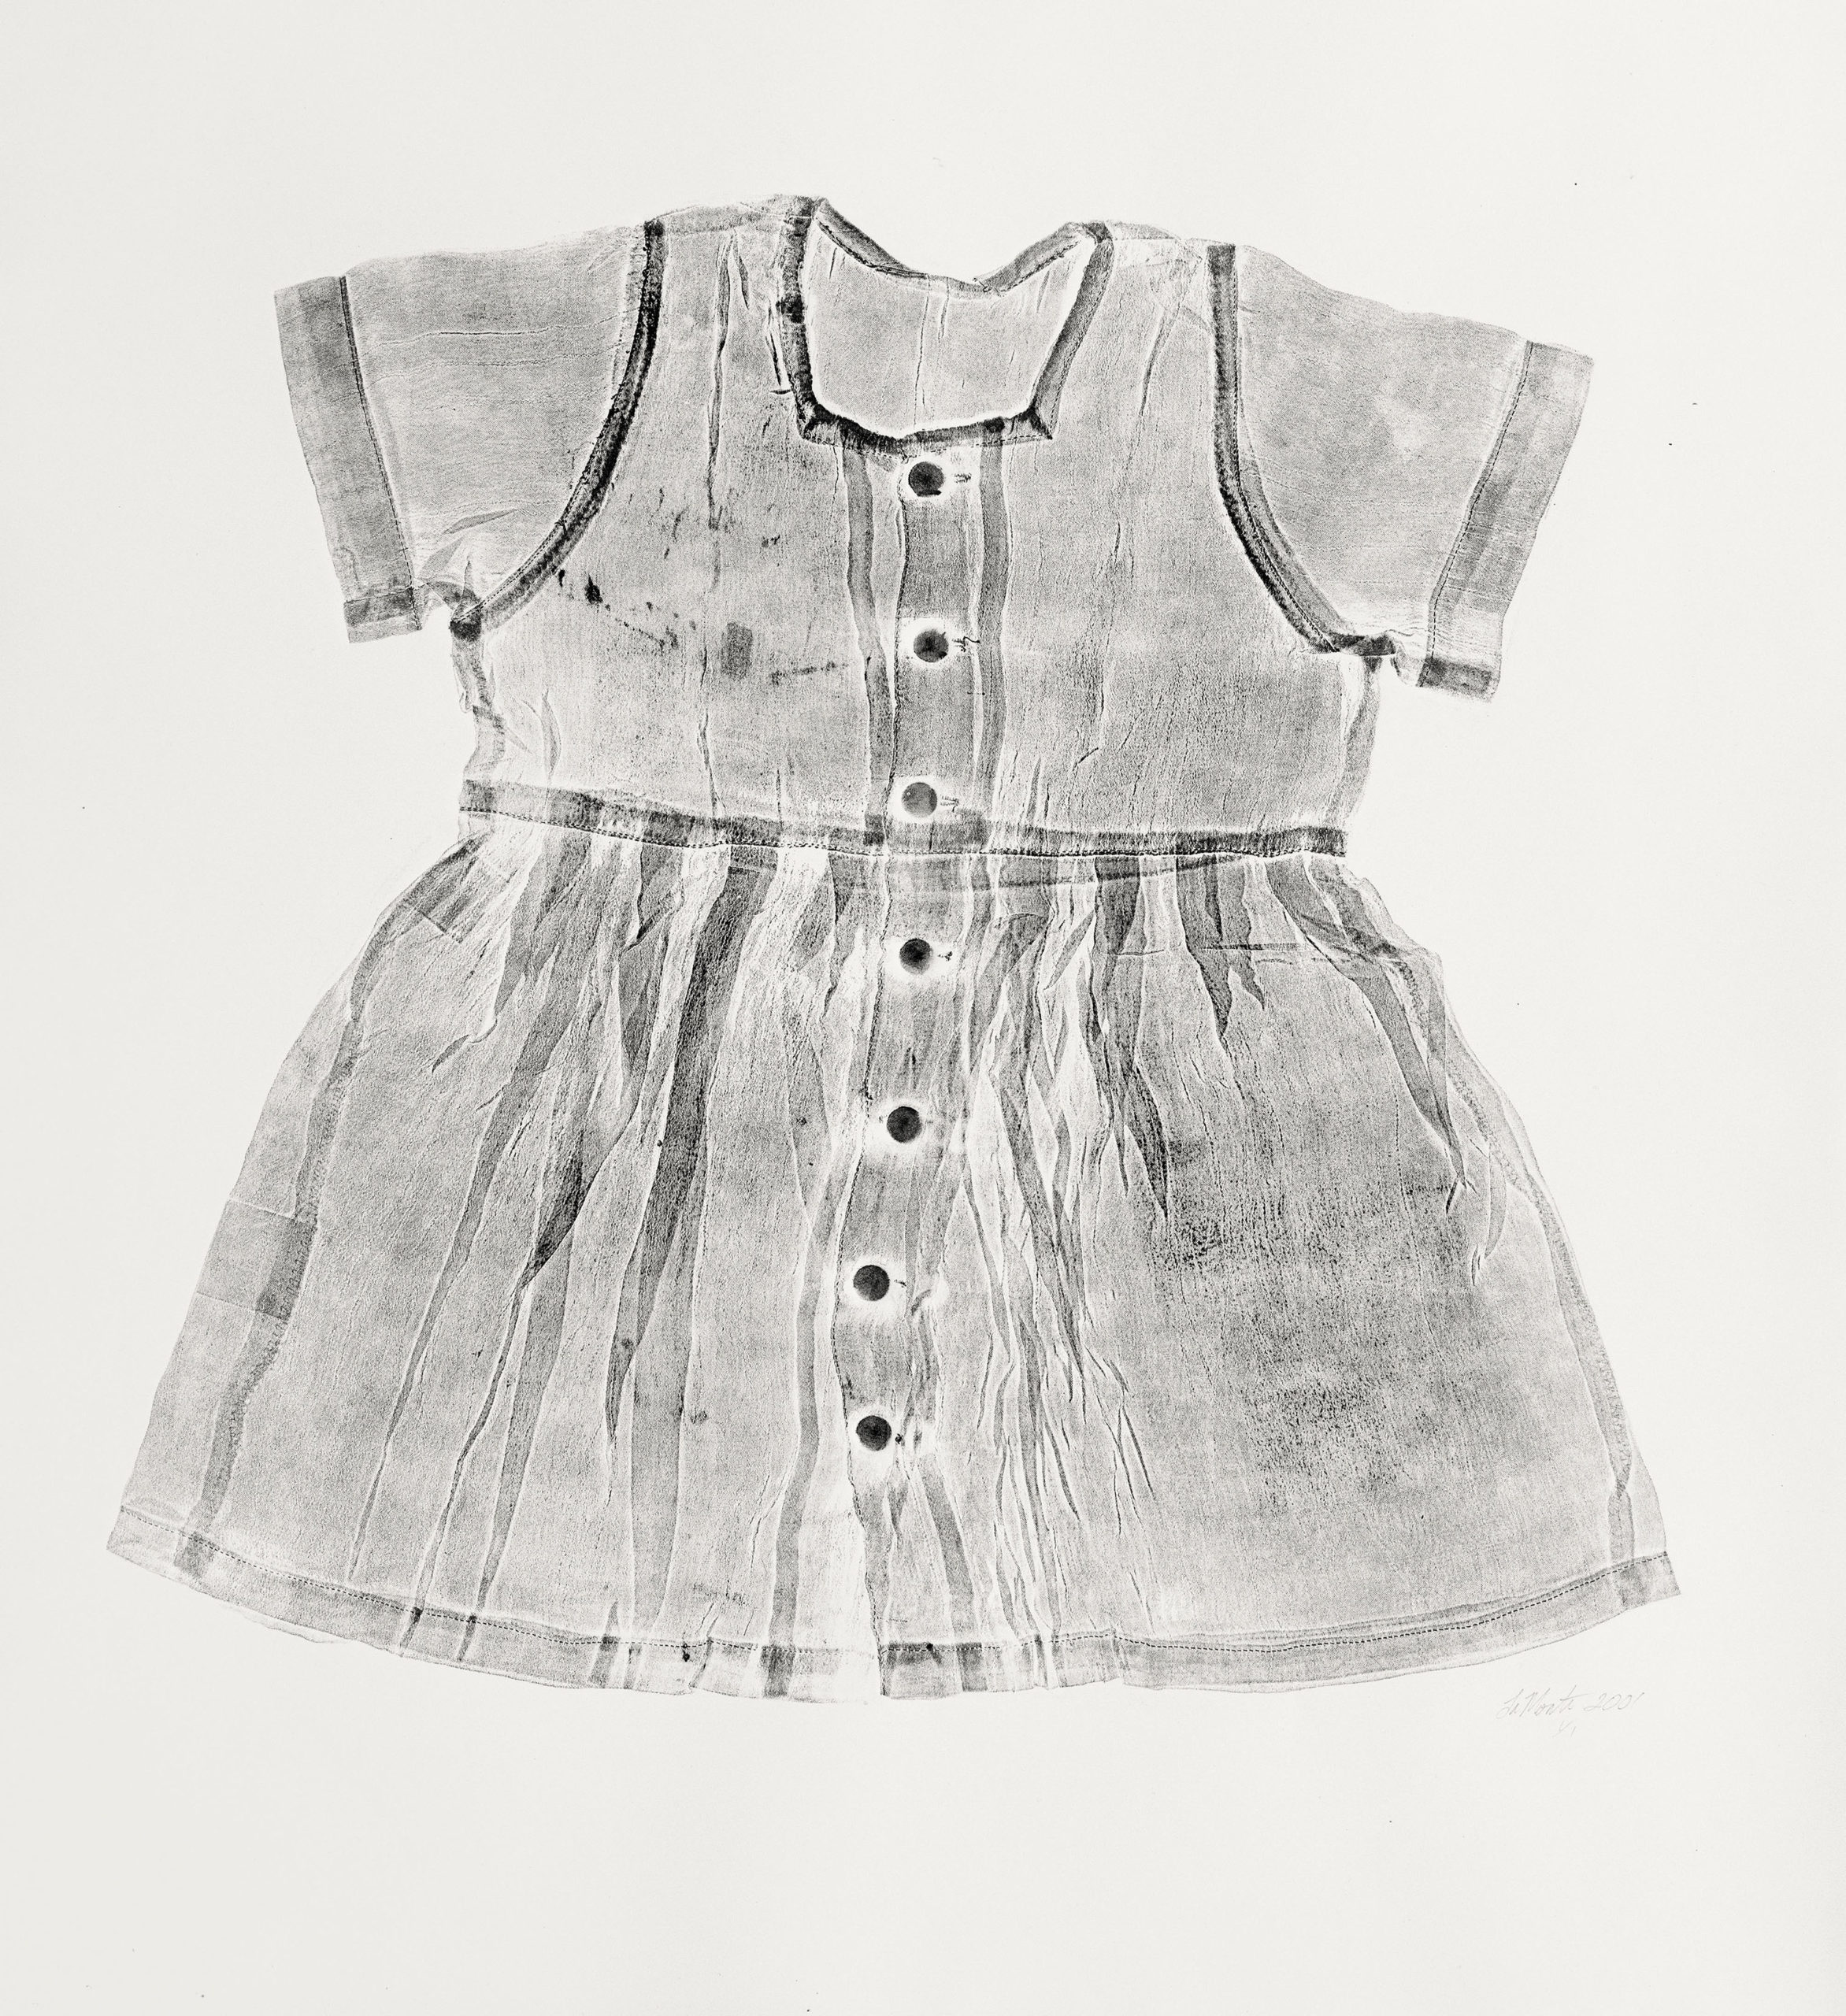 

											Karen LaMonte</b>

											<em>
												Sartoriotypes</em> 

											<h4>
																							</h4>

		                																																													<i>Impression Child’s Dress,</i>  
																																								2001, 
																																								Sartoriotype, Monotype print on smooth art paper, 
																																								25 ⅔ × 23 inches  
																								
		                				